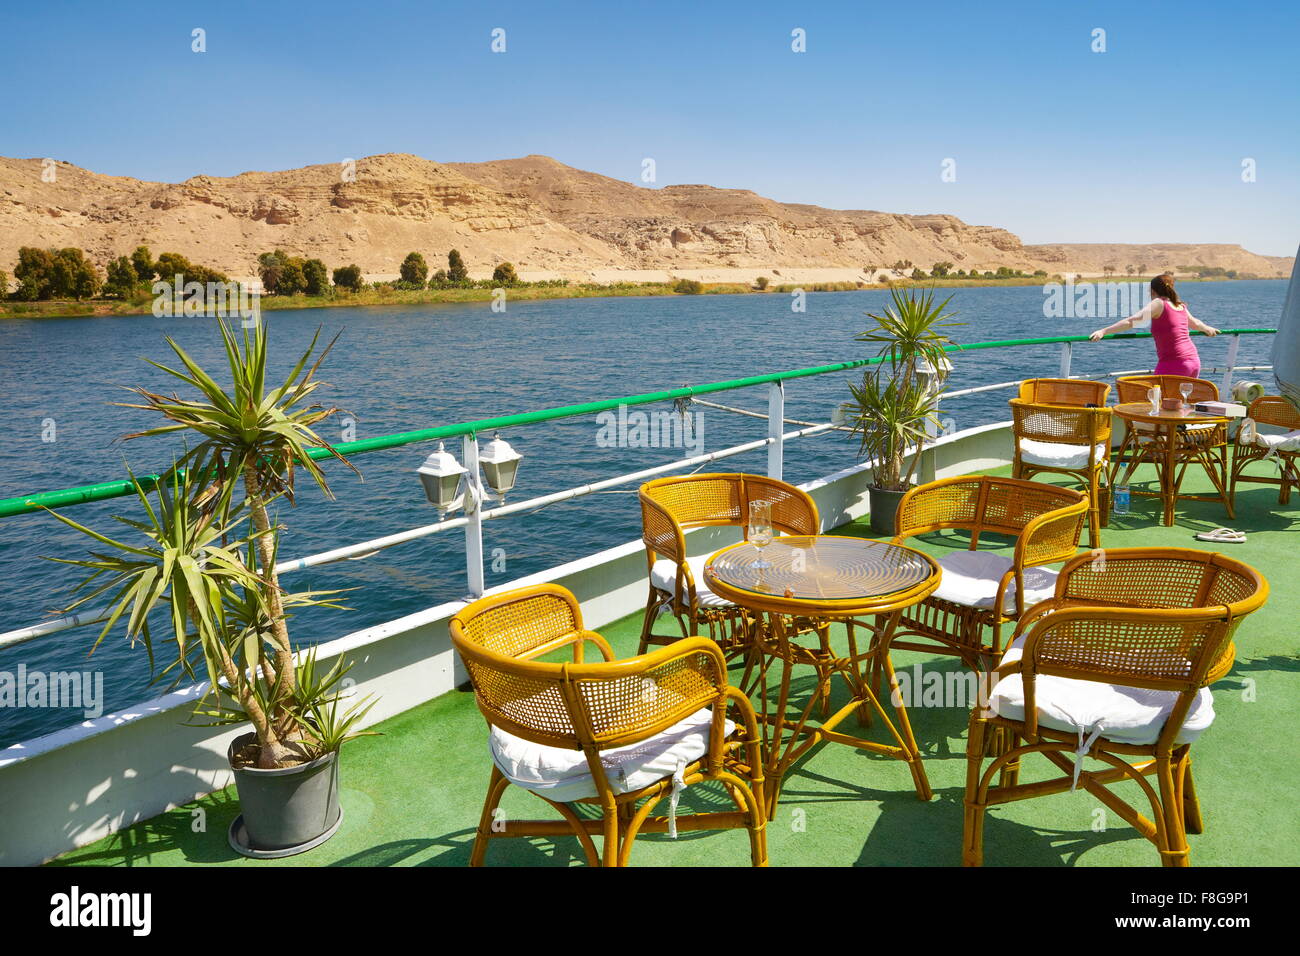 Nile River - cruise on the Nile, Egypt Stock Photo